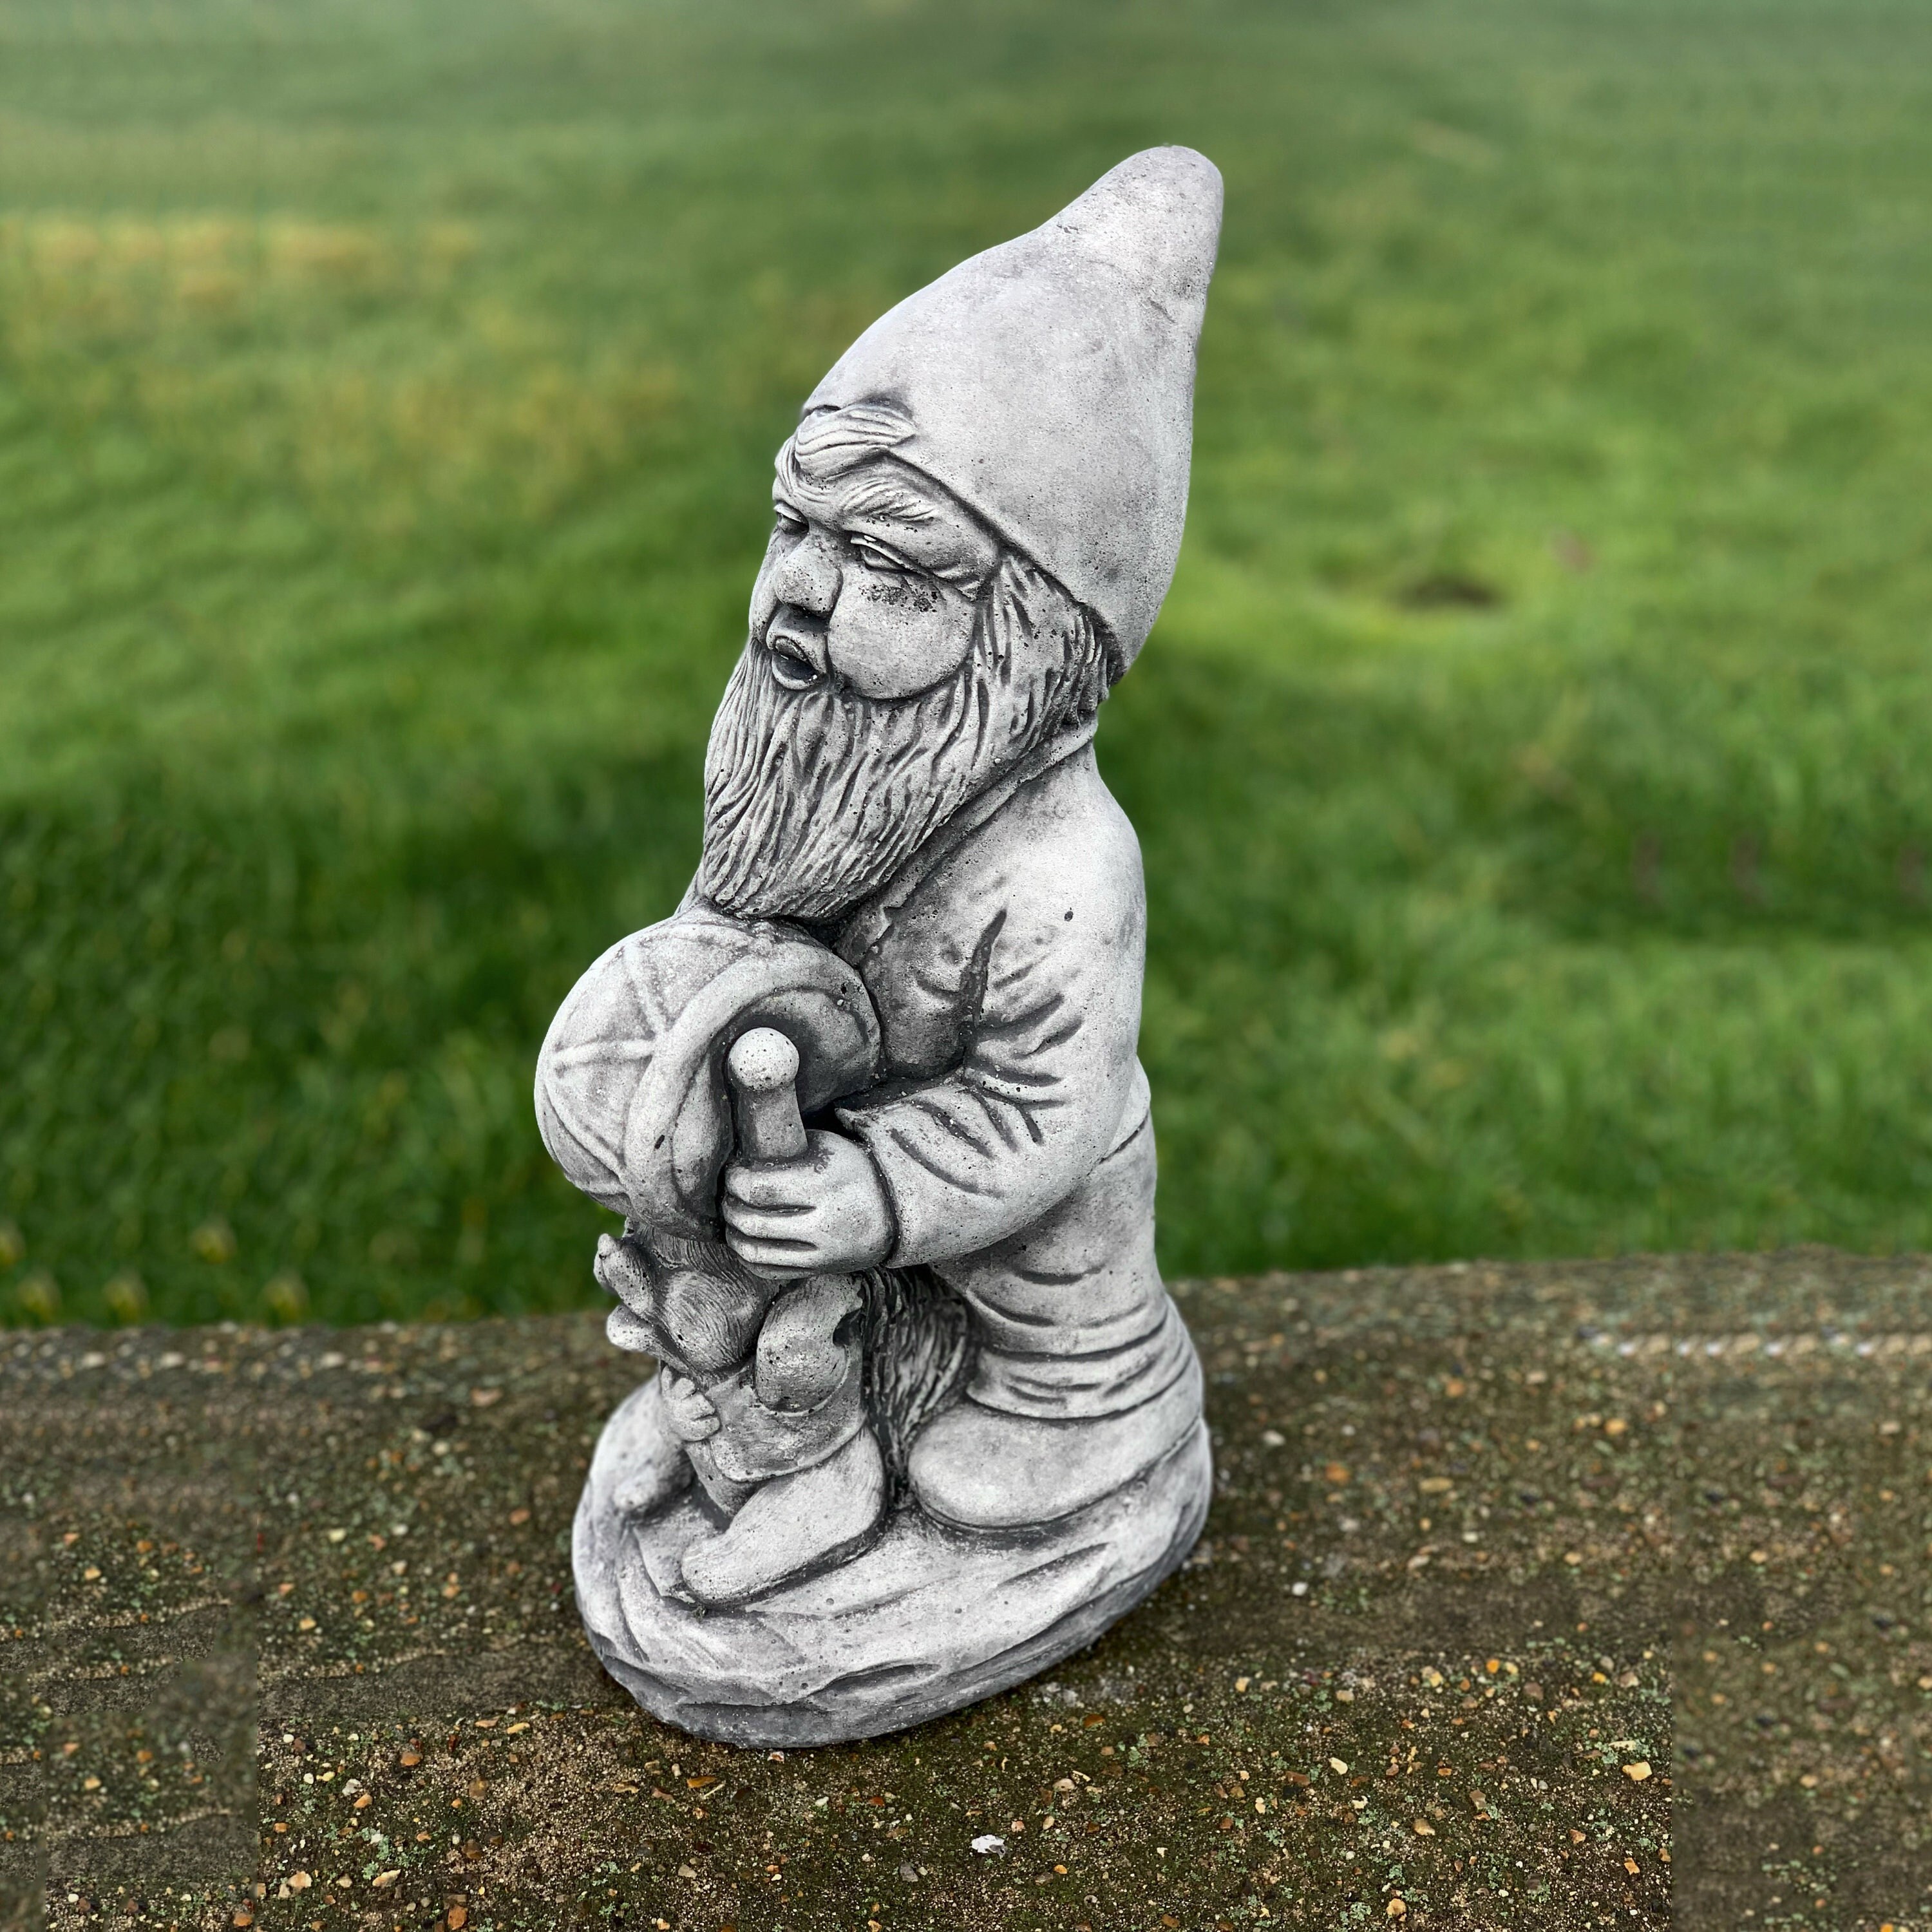 Resin Fishing Gnome Dwarf Garden Lawn Statue Ornament Outdoor Yard Decor  5.5inch